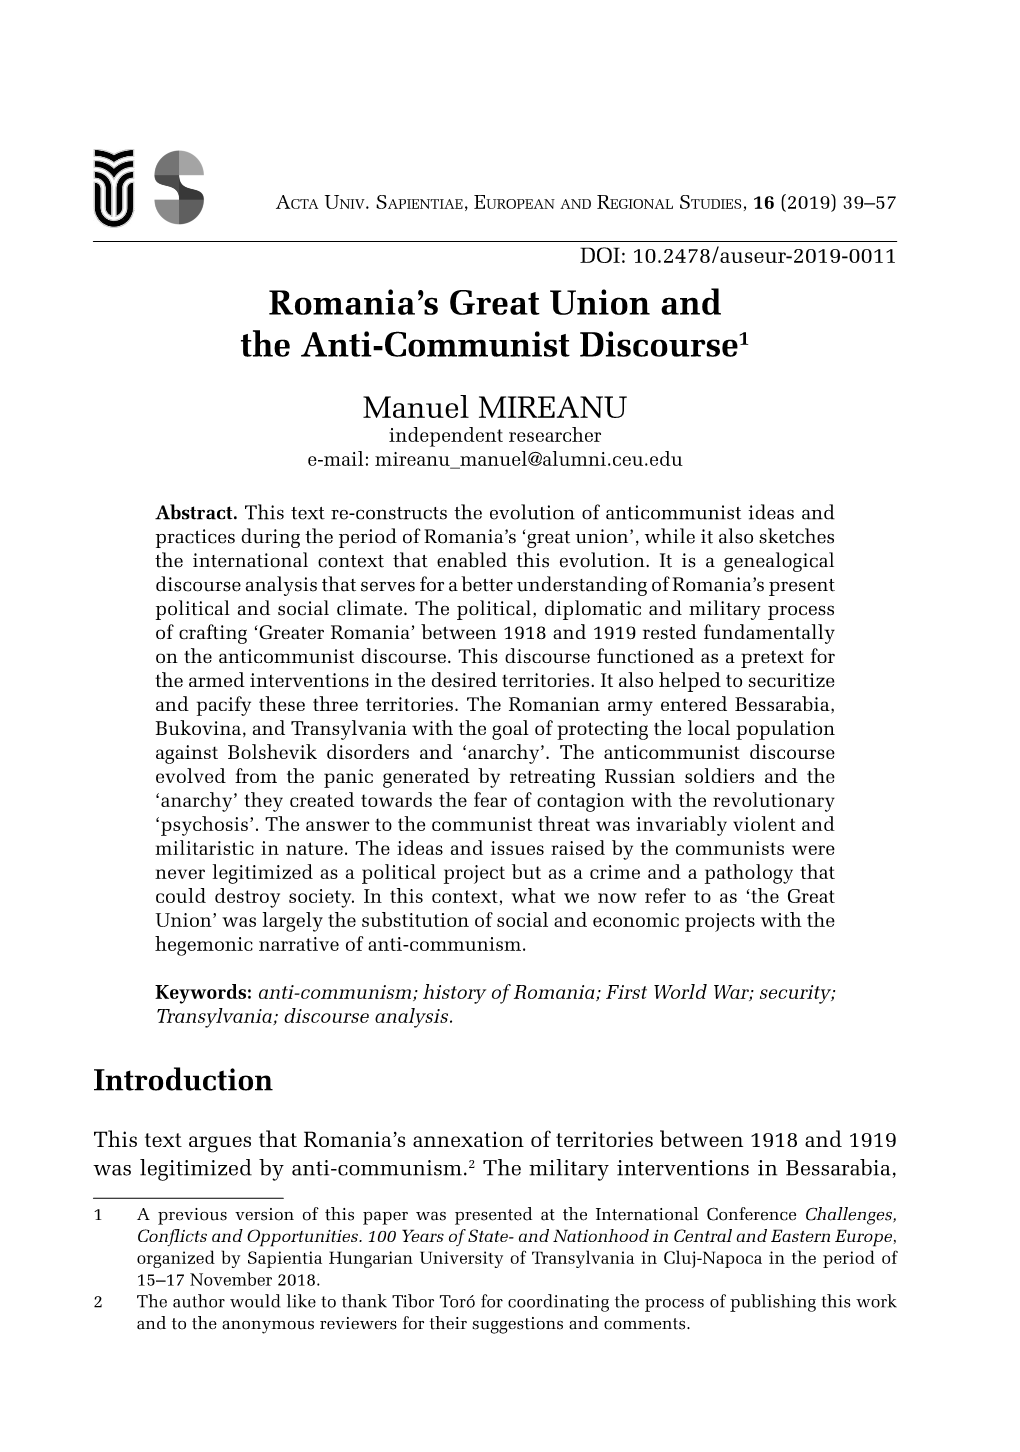 Romania's Great Union and the Anti-Communist Discourse1